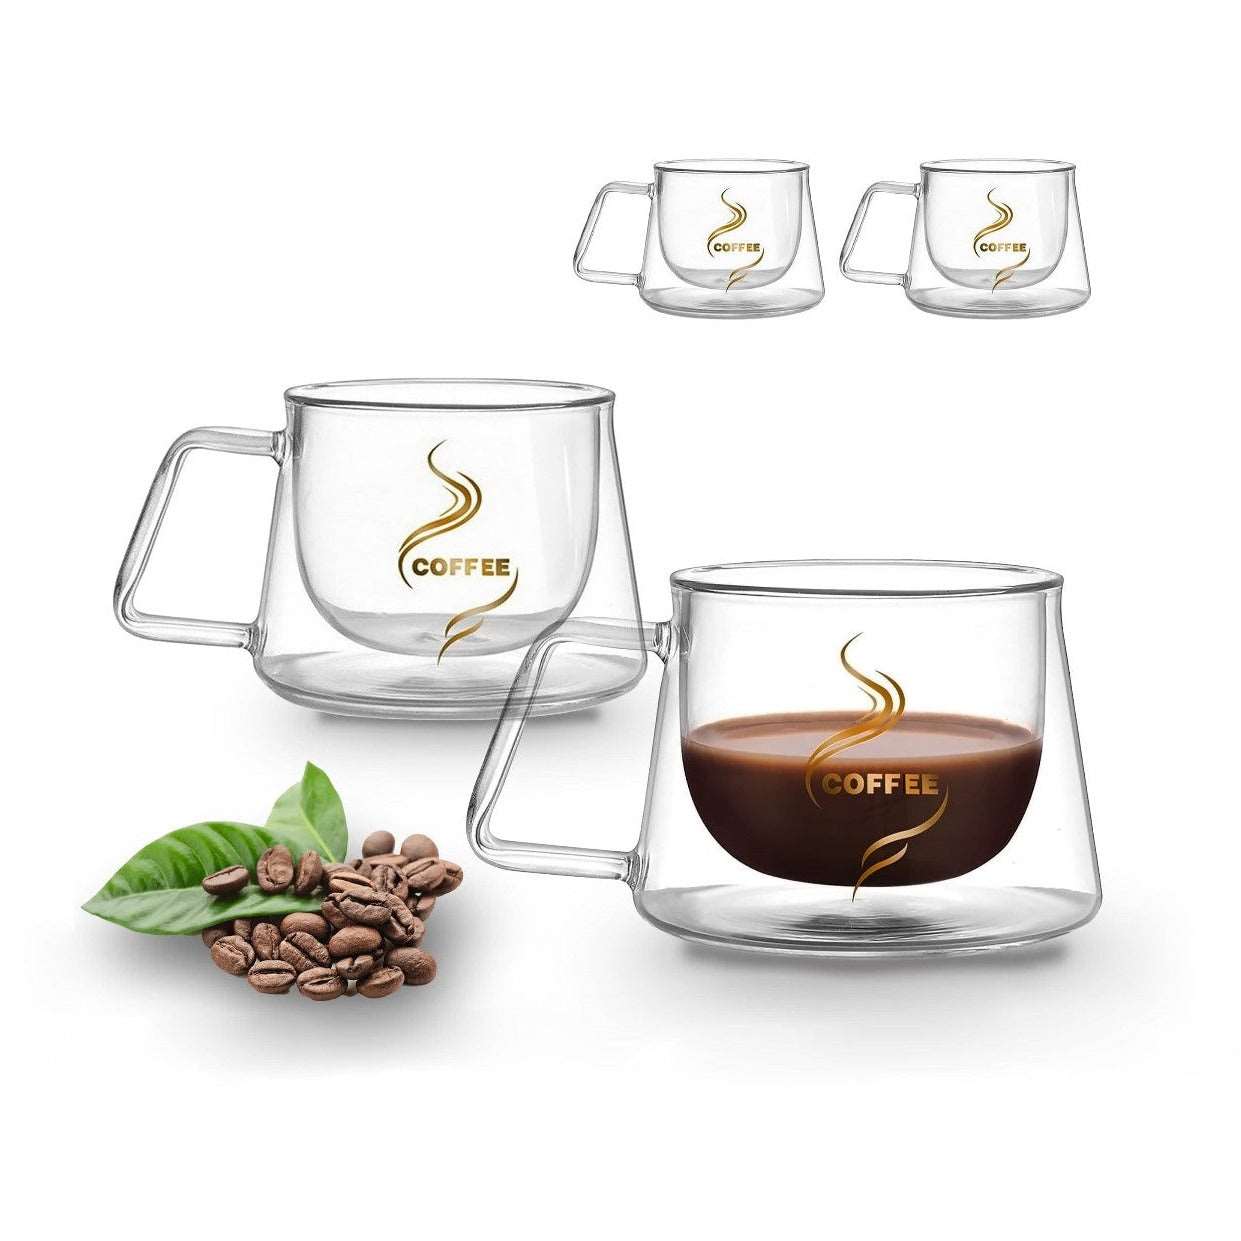 Iced Coffee High Borosilicate Glass Cup With Handles, Irish Glass